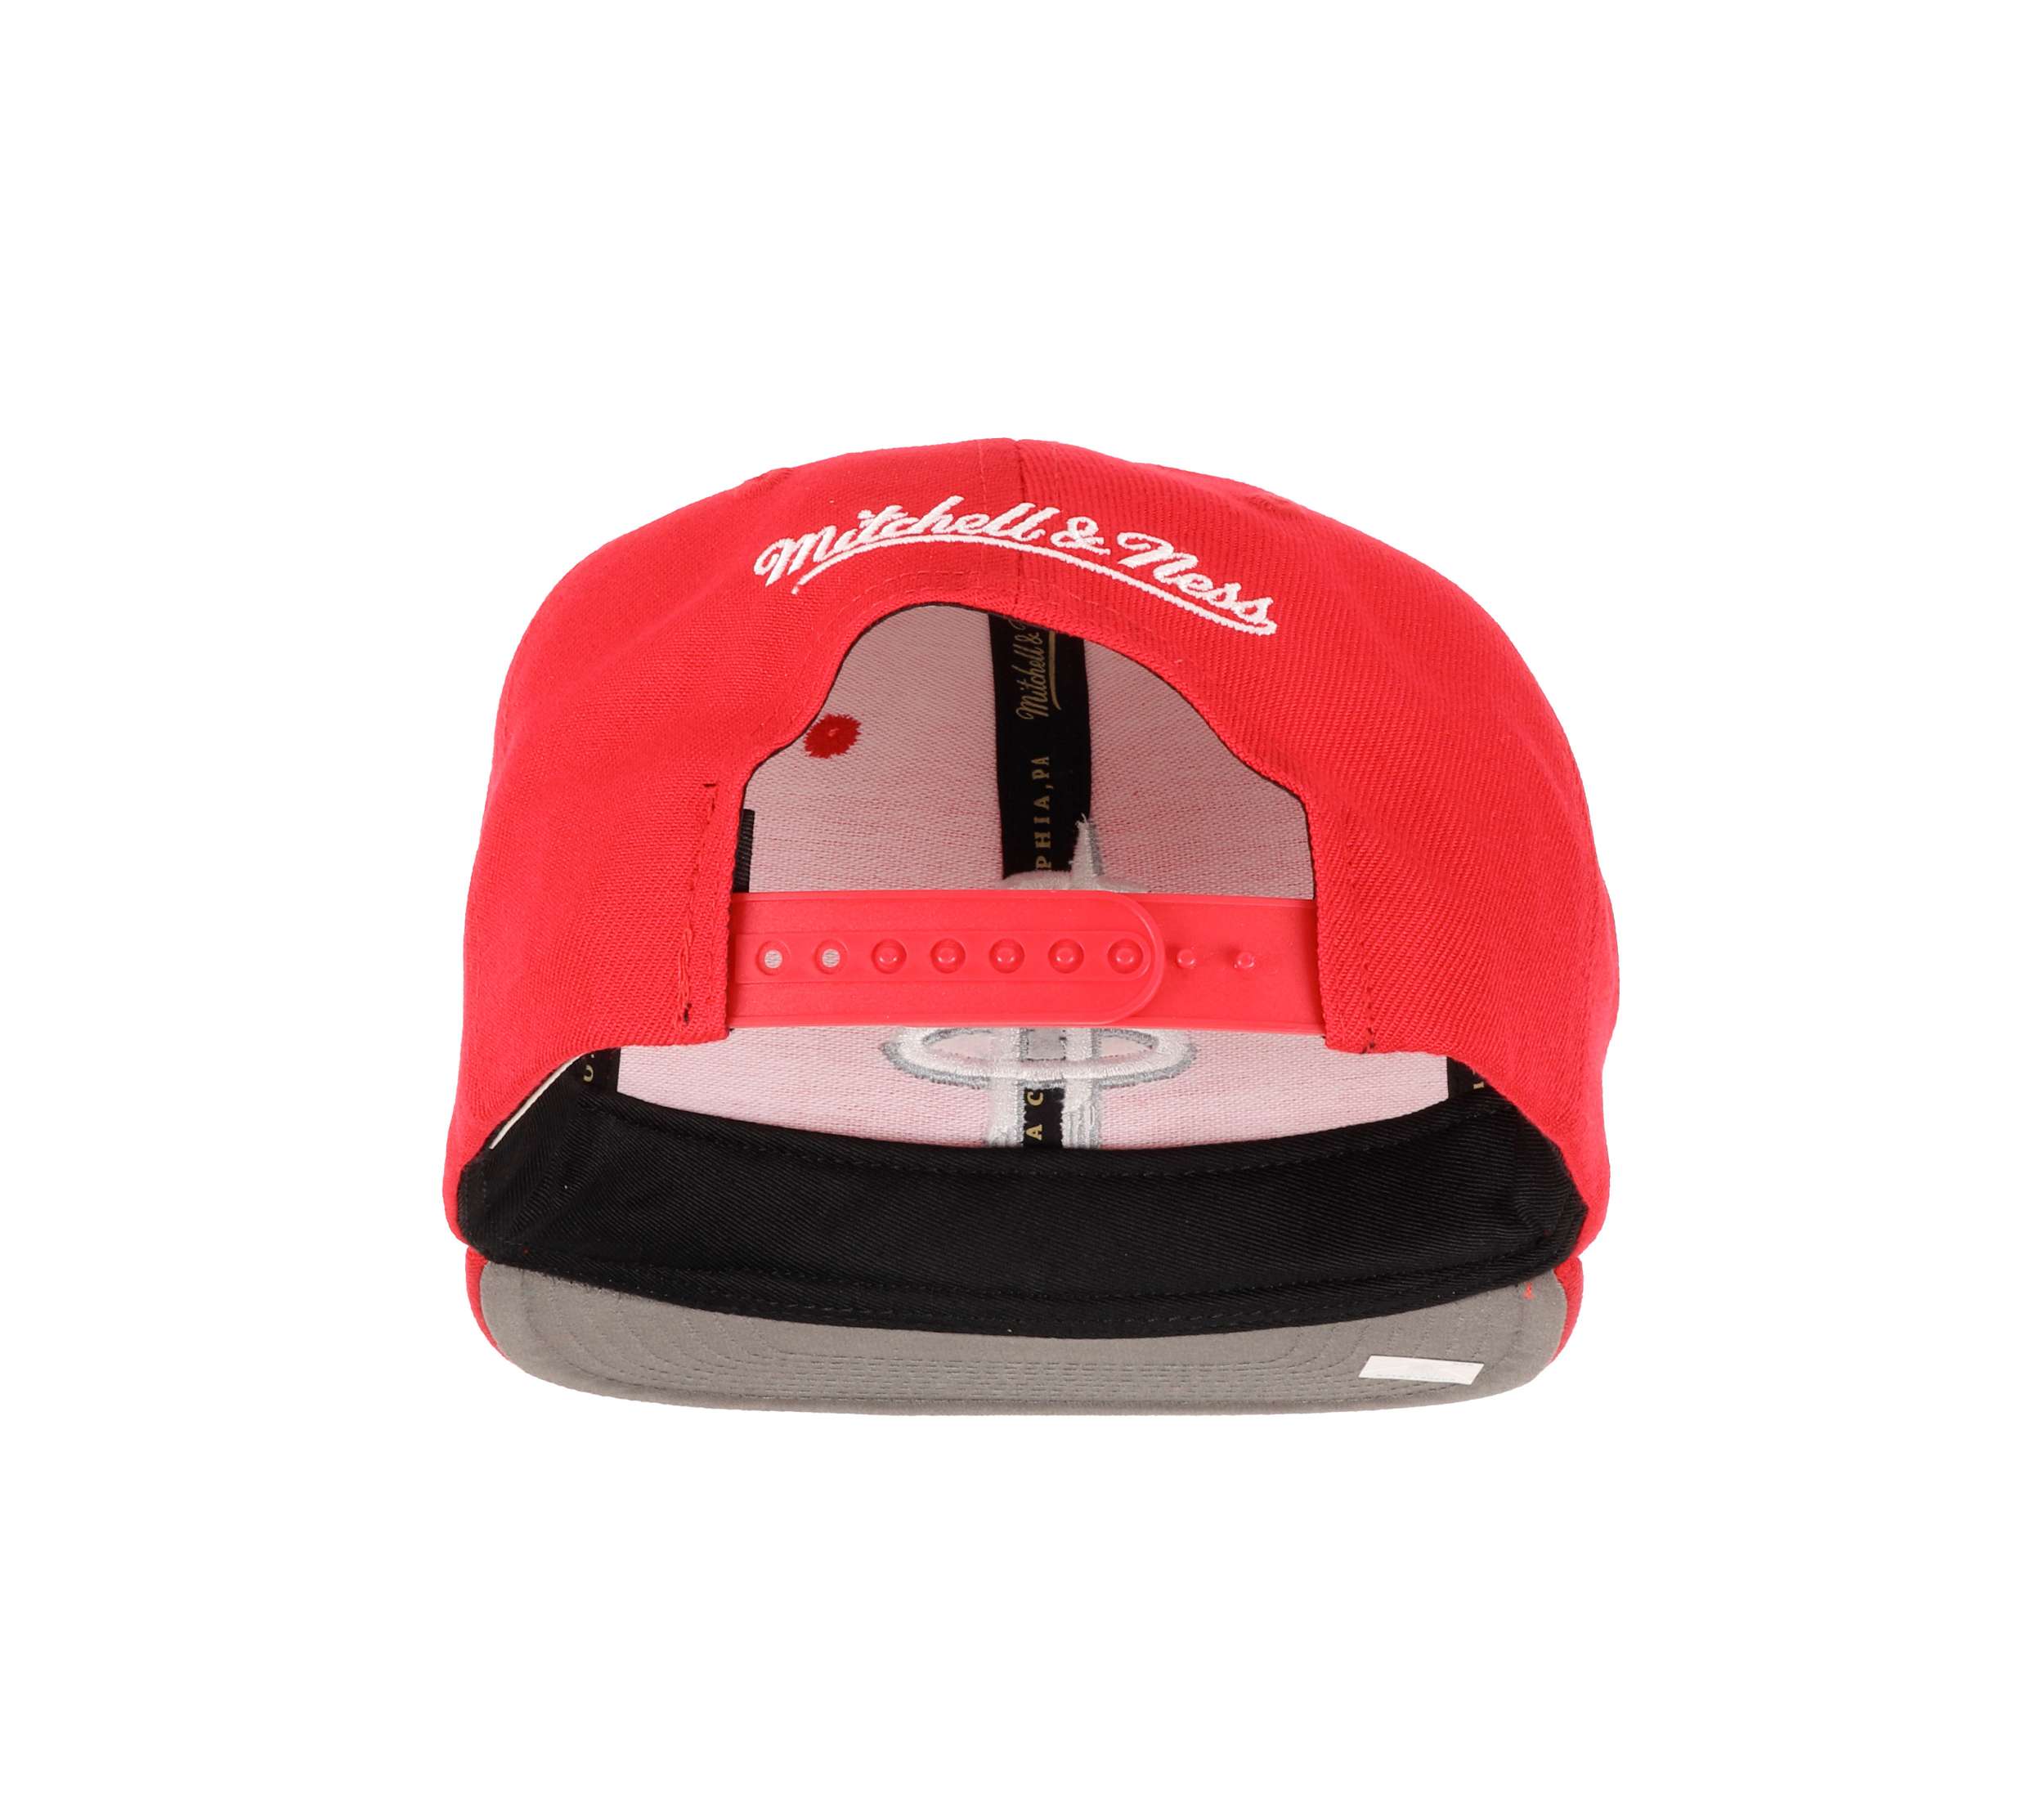 Houston Rockets NBA Team Ground 2.0 Original Fit Red Adjustable Snapback Cap Mitchell & Ness